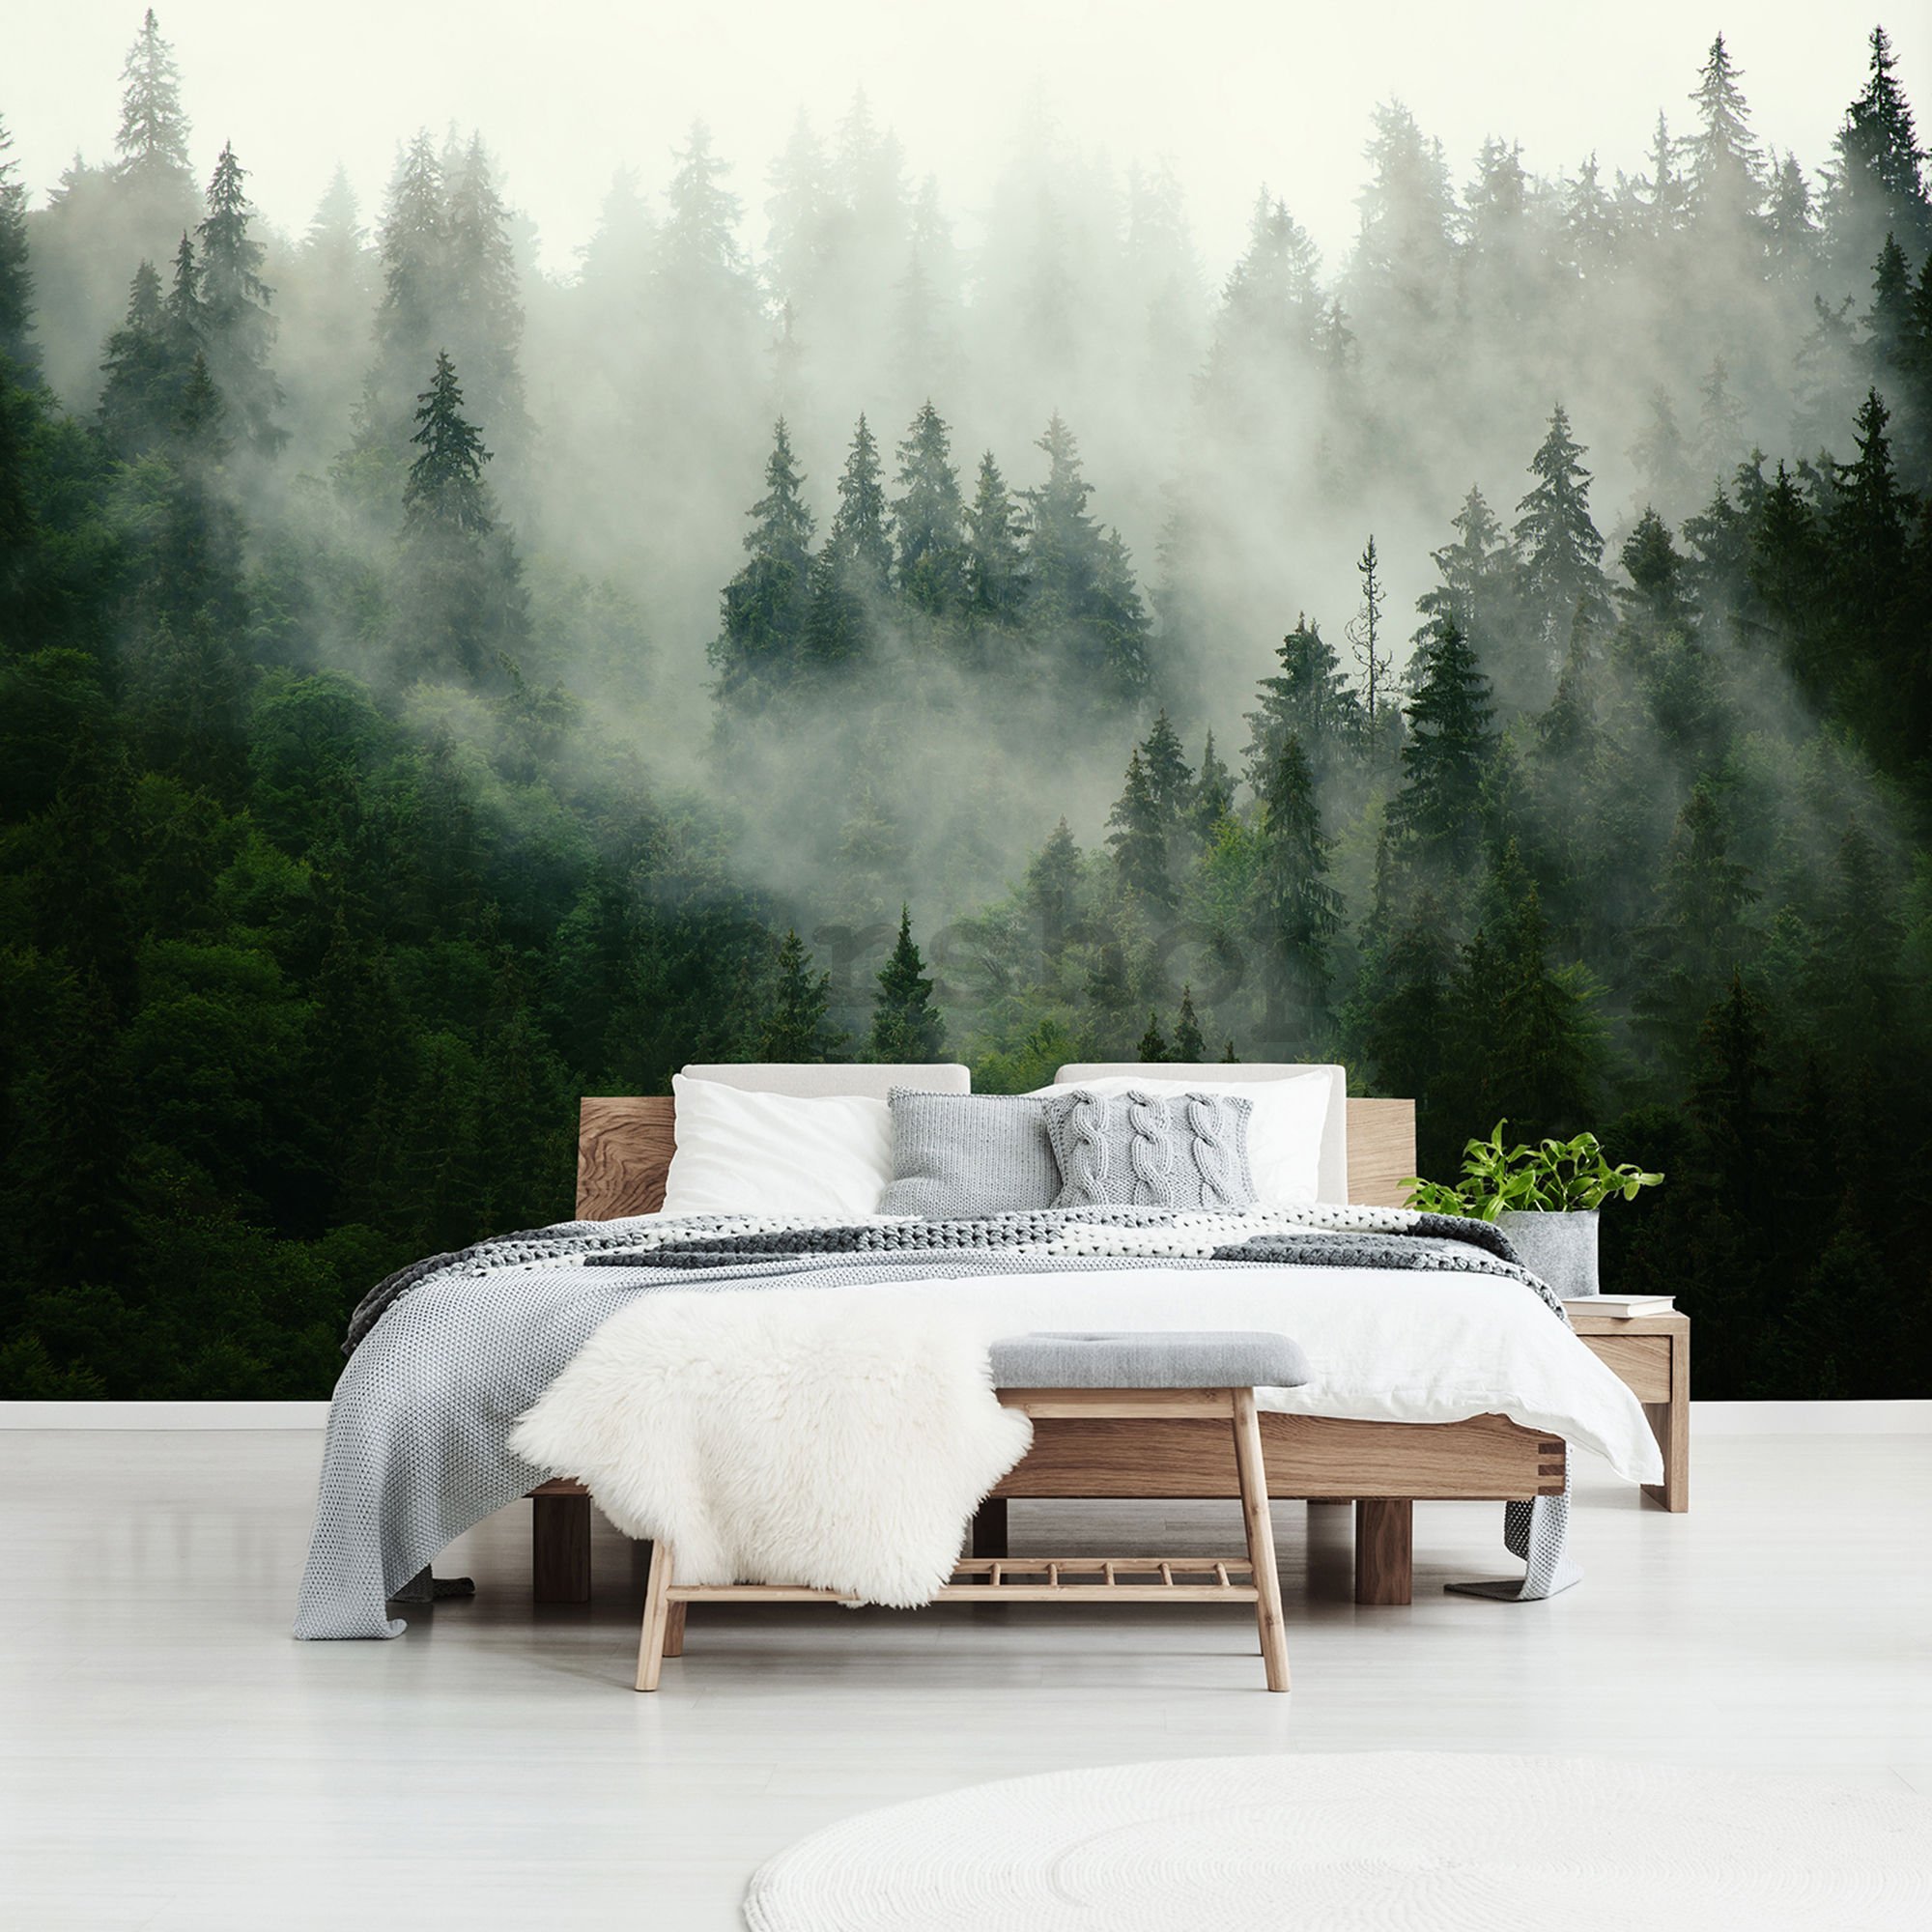 Fototapeta: Mlha nad lesem (1) - 184x254 cm